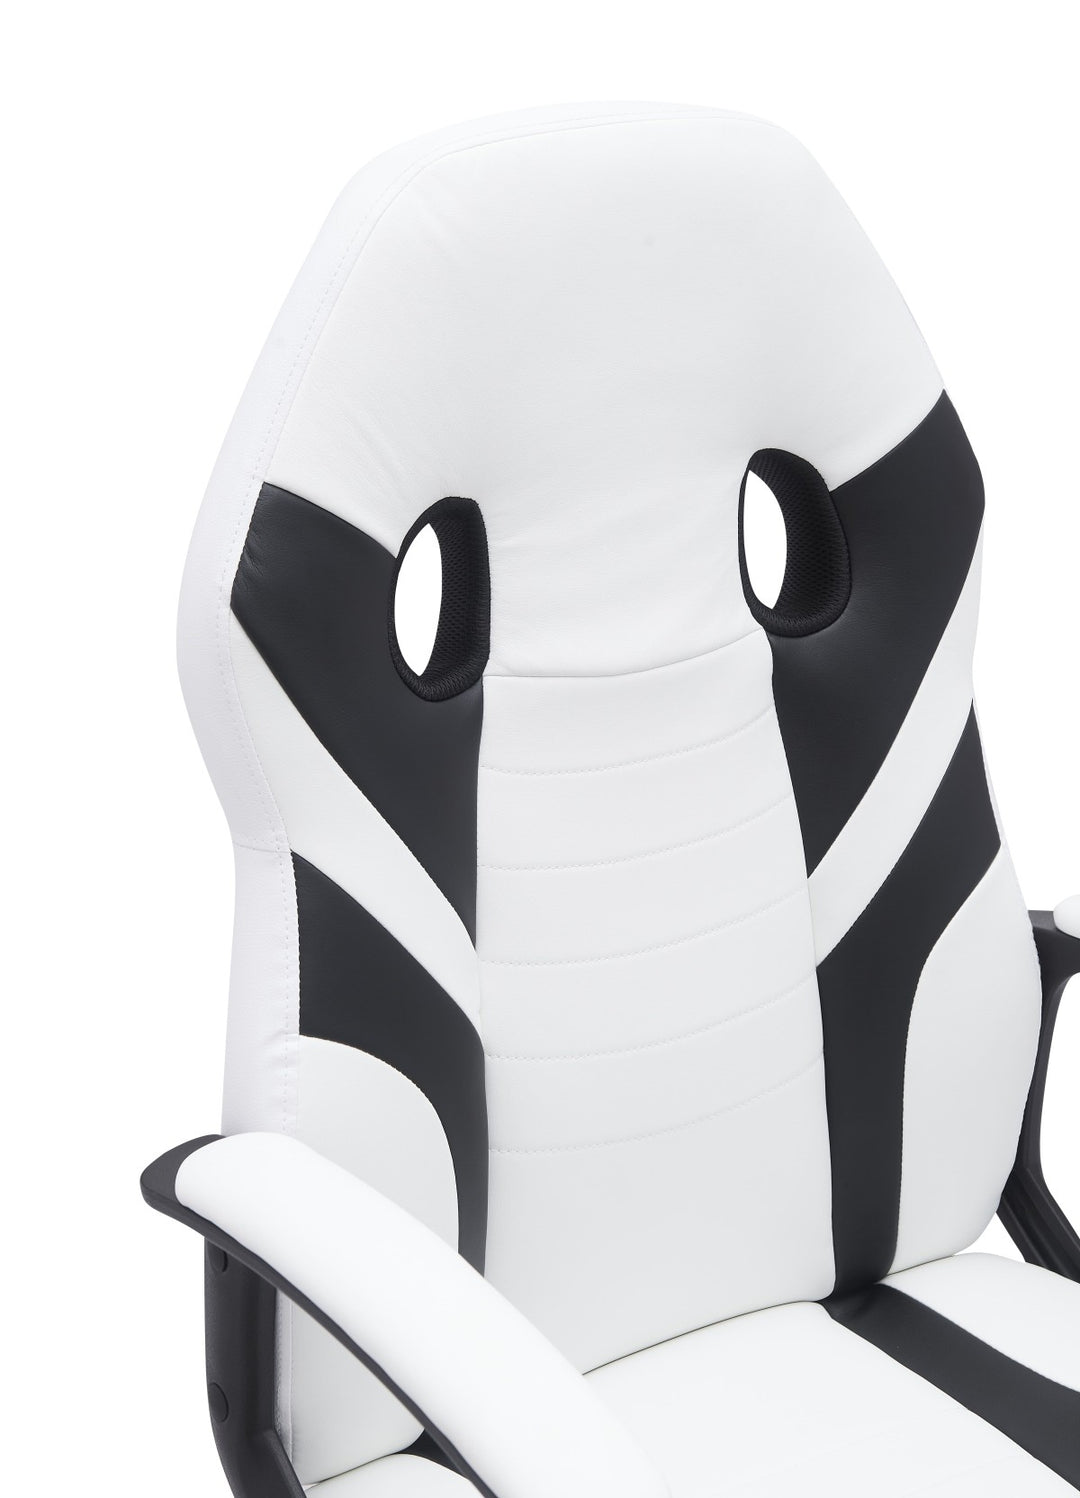 White/Black Ergonomic Gaming Chair | Butterfly Tilt Mechanism, Hydraulic Lift & Sleek Design